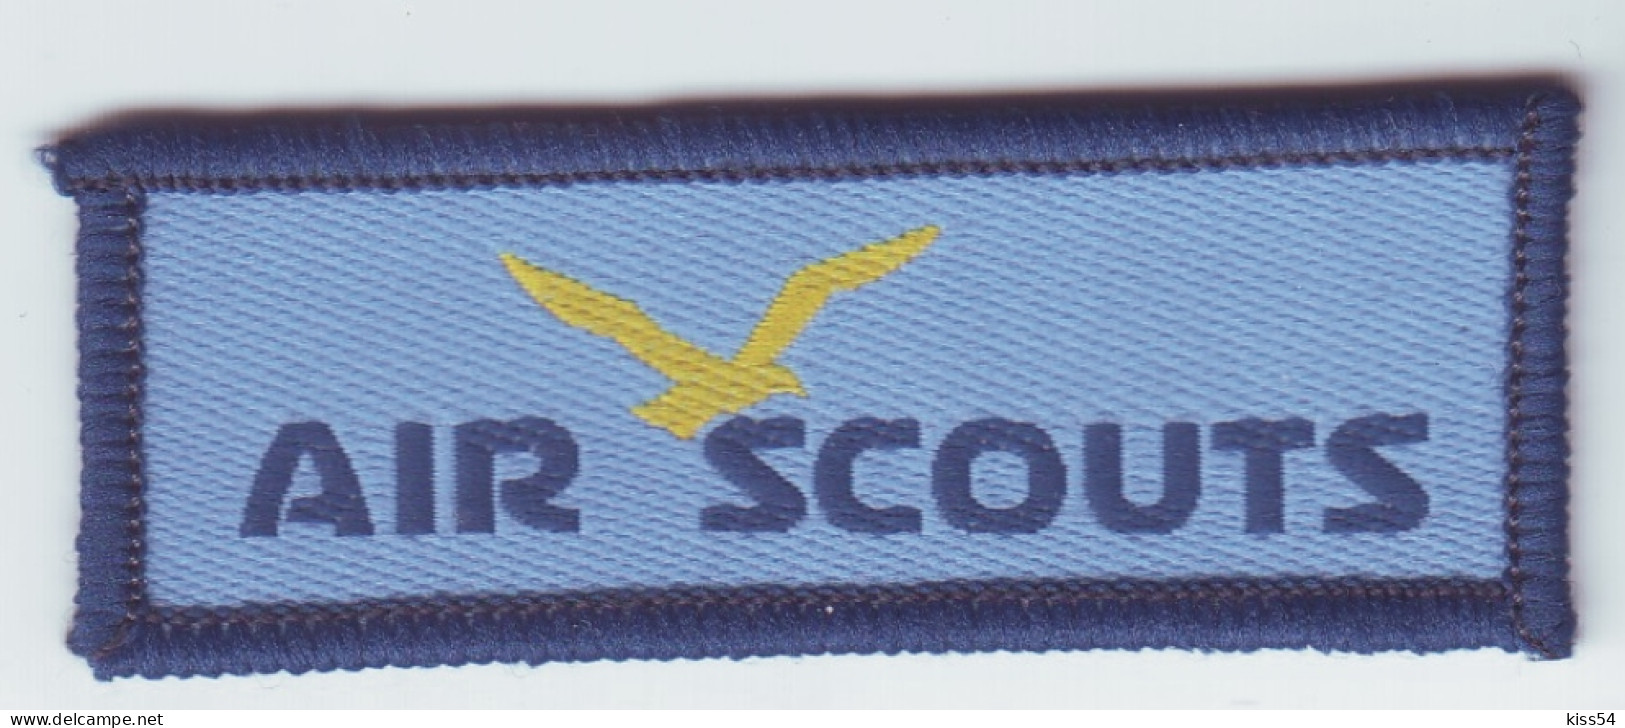 B 19 - 105 ENGLAND Scout Badge - AIR SCOUTS - Pfadfinder-Bewegung